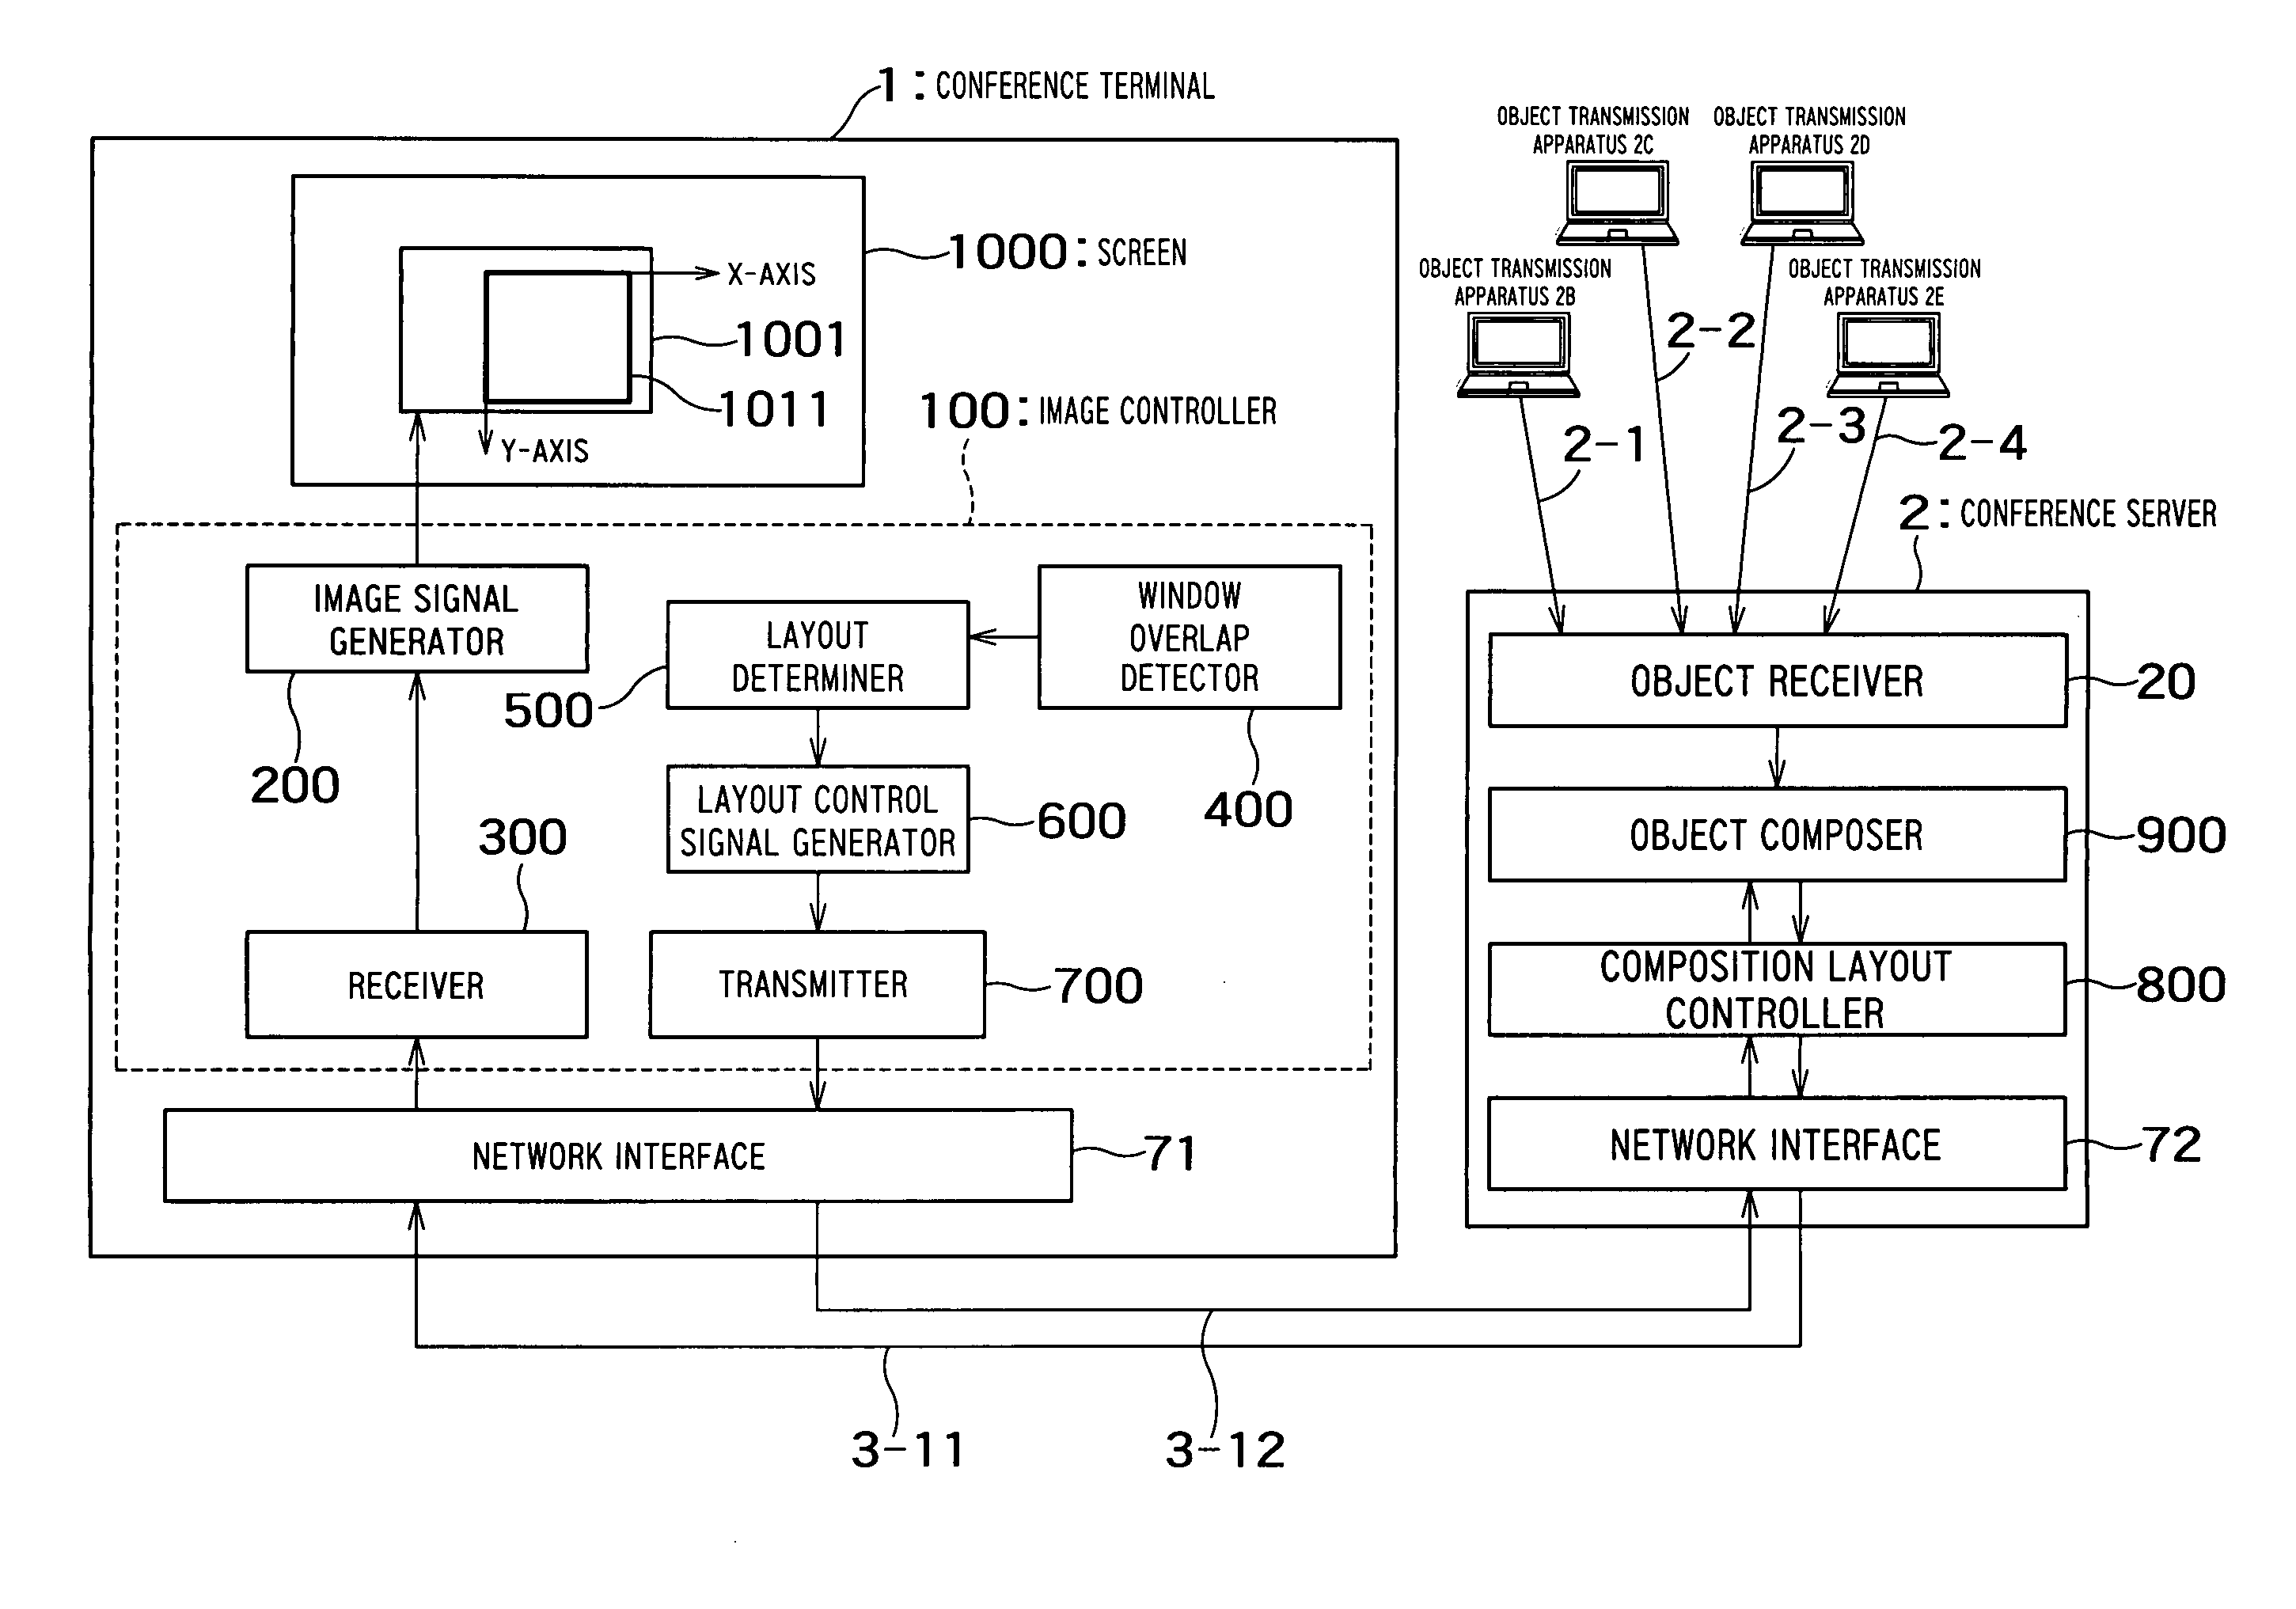 Display apparatus, method, and program